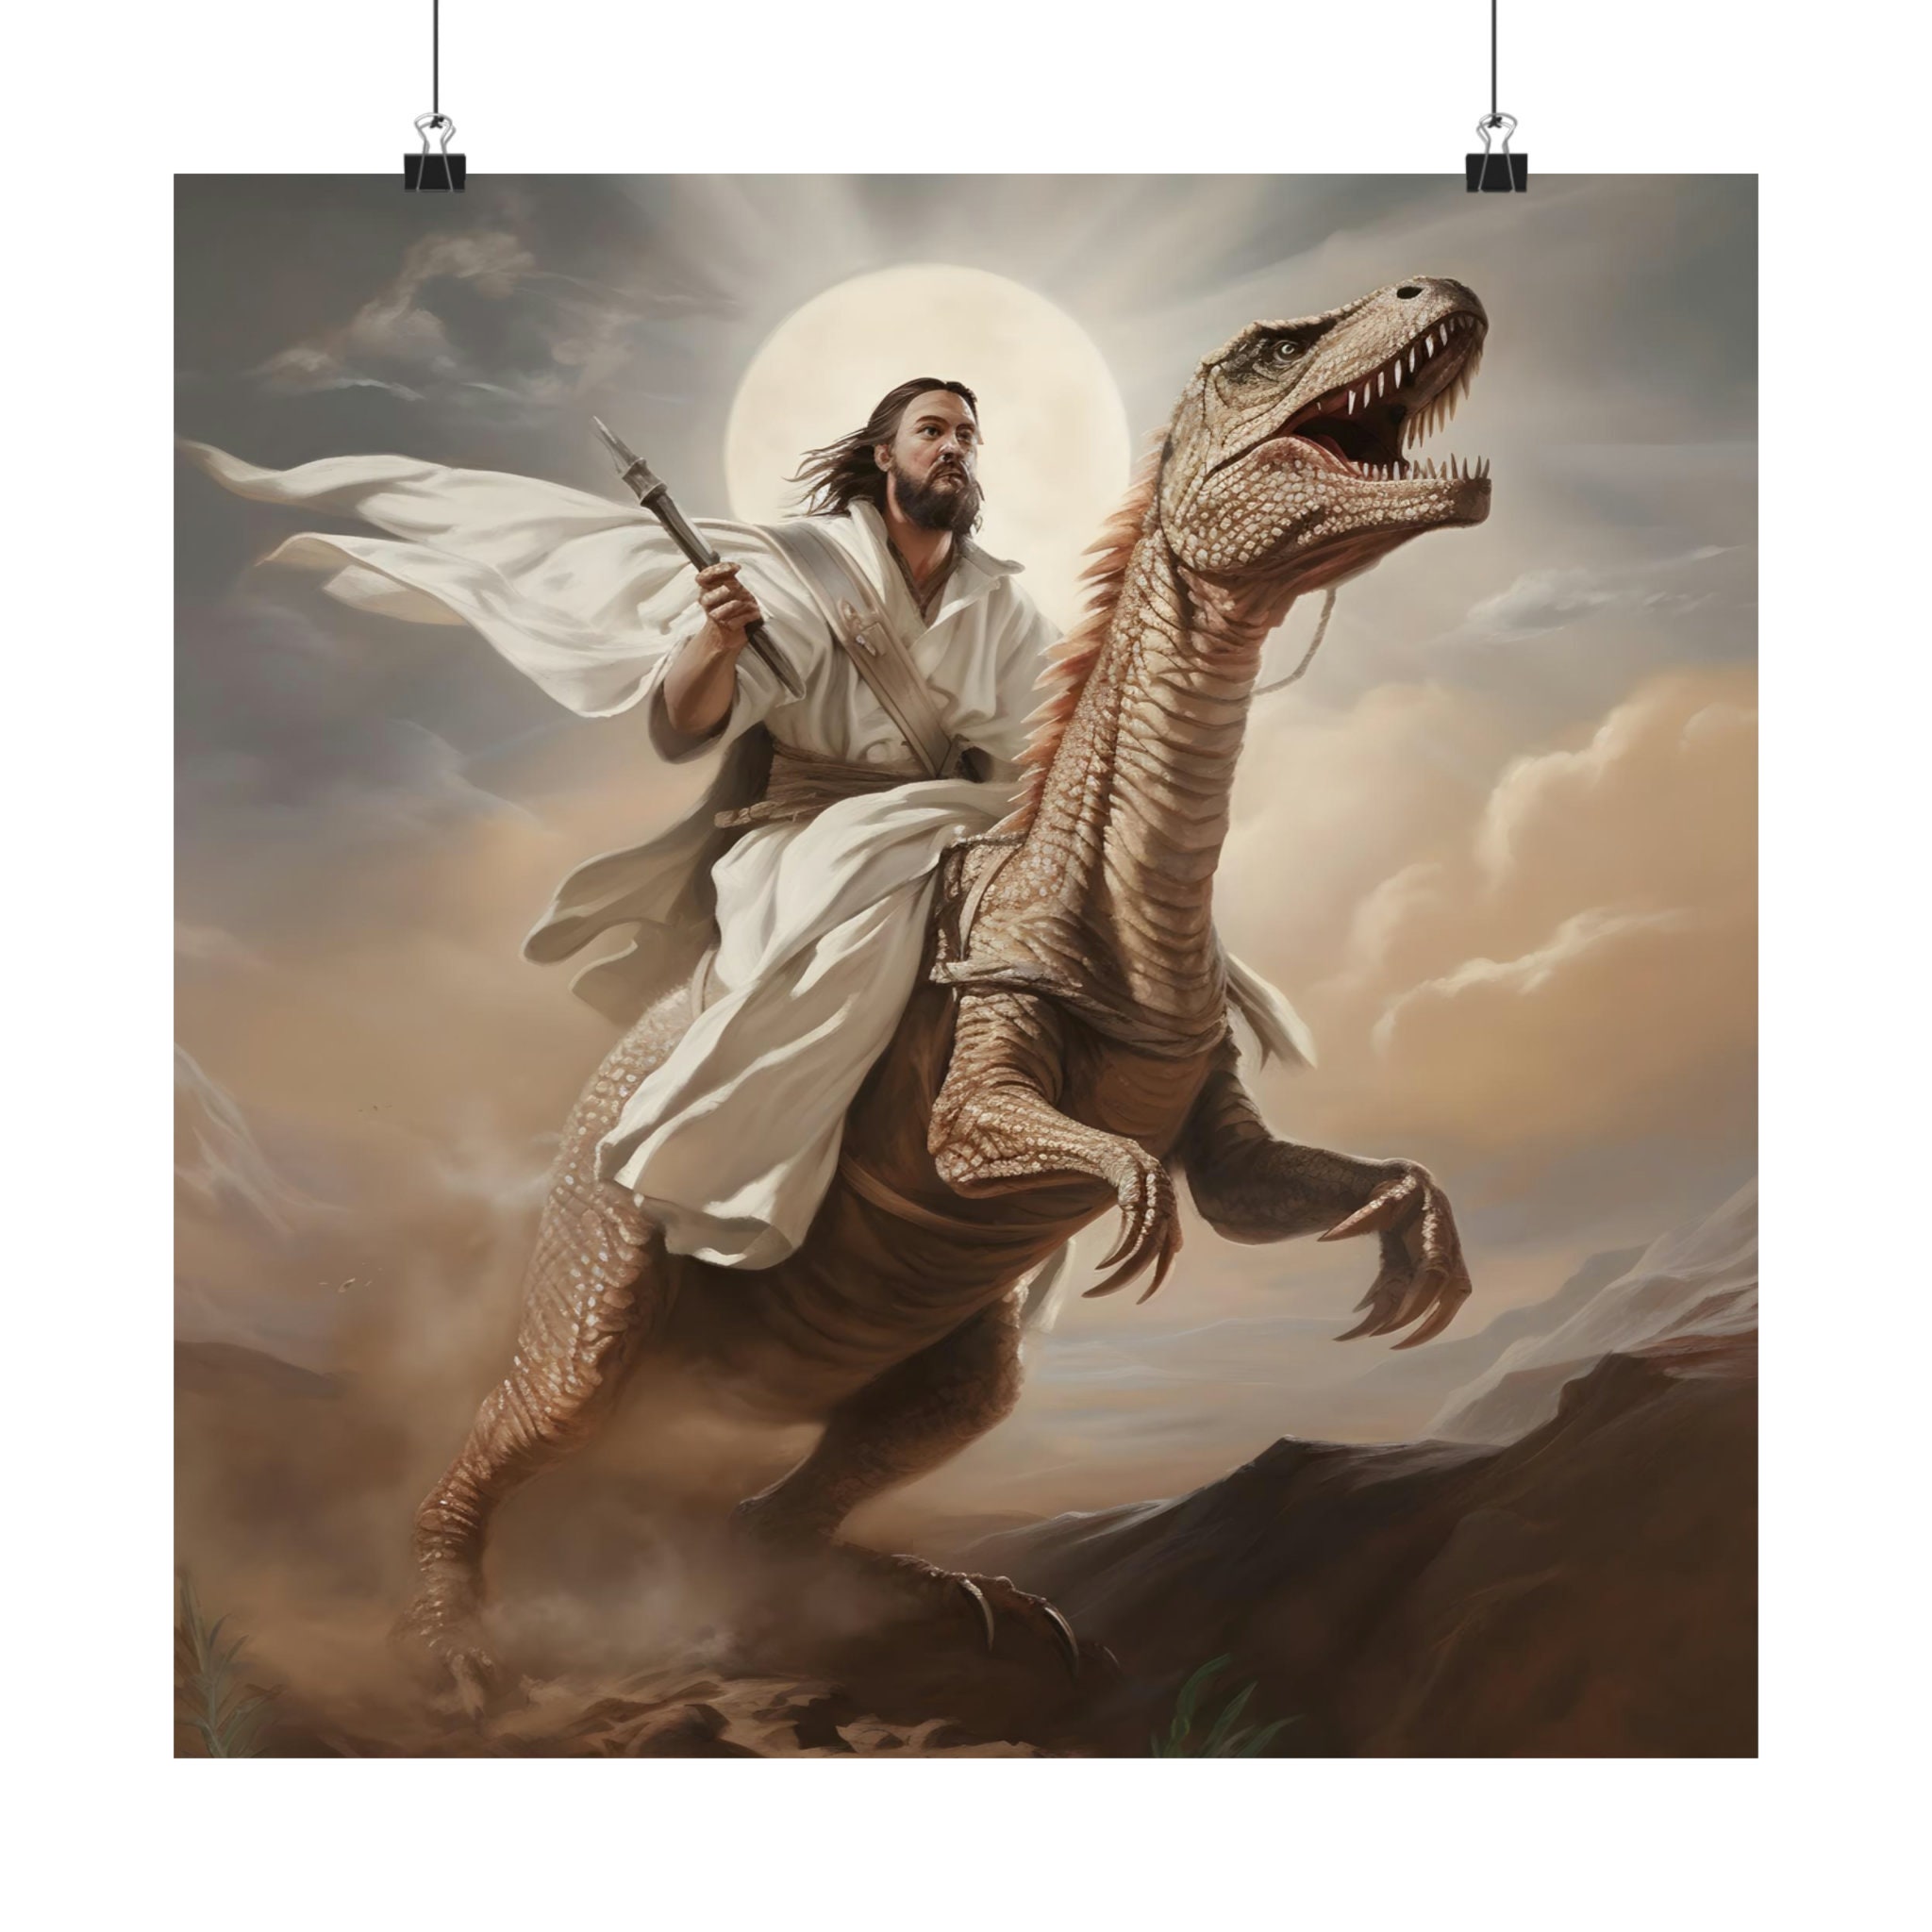 Jesus riding a velociraptor